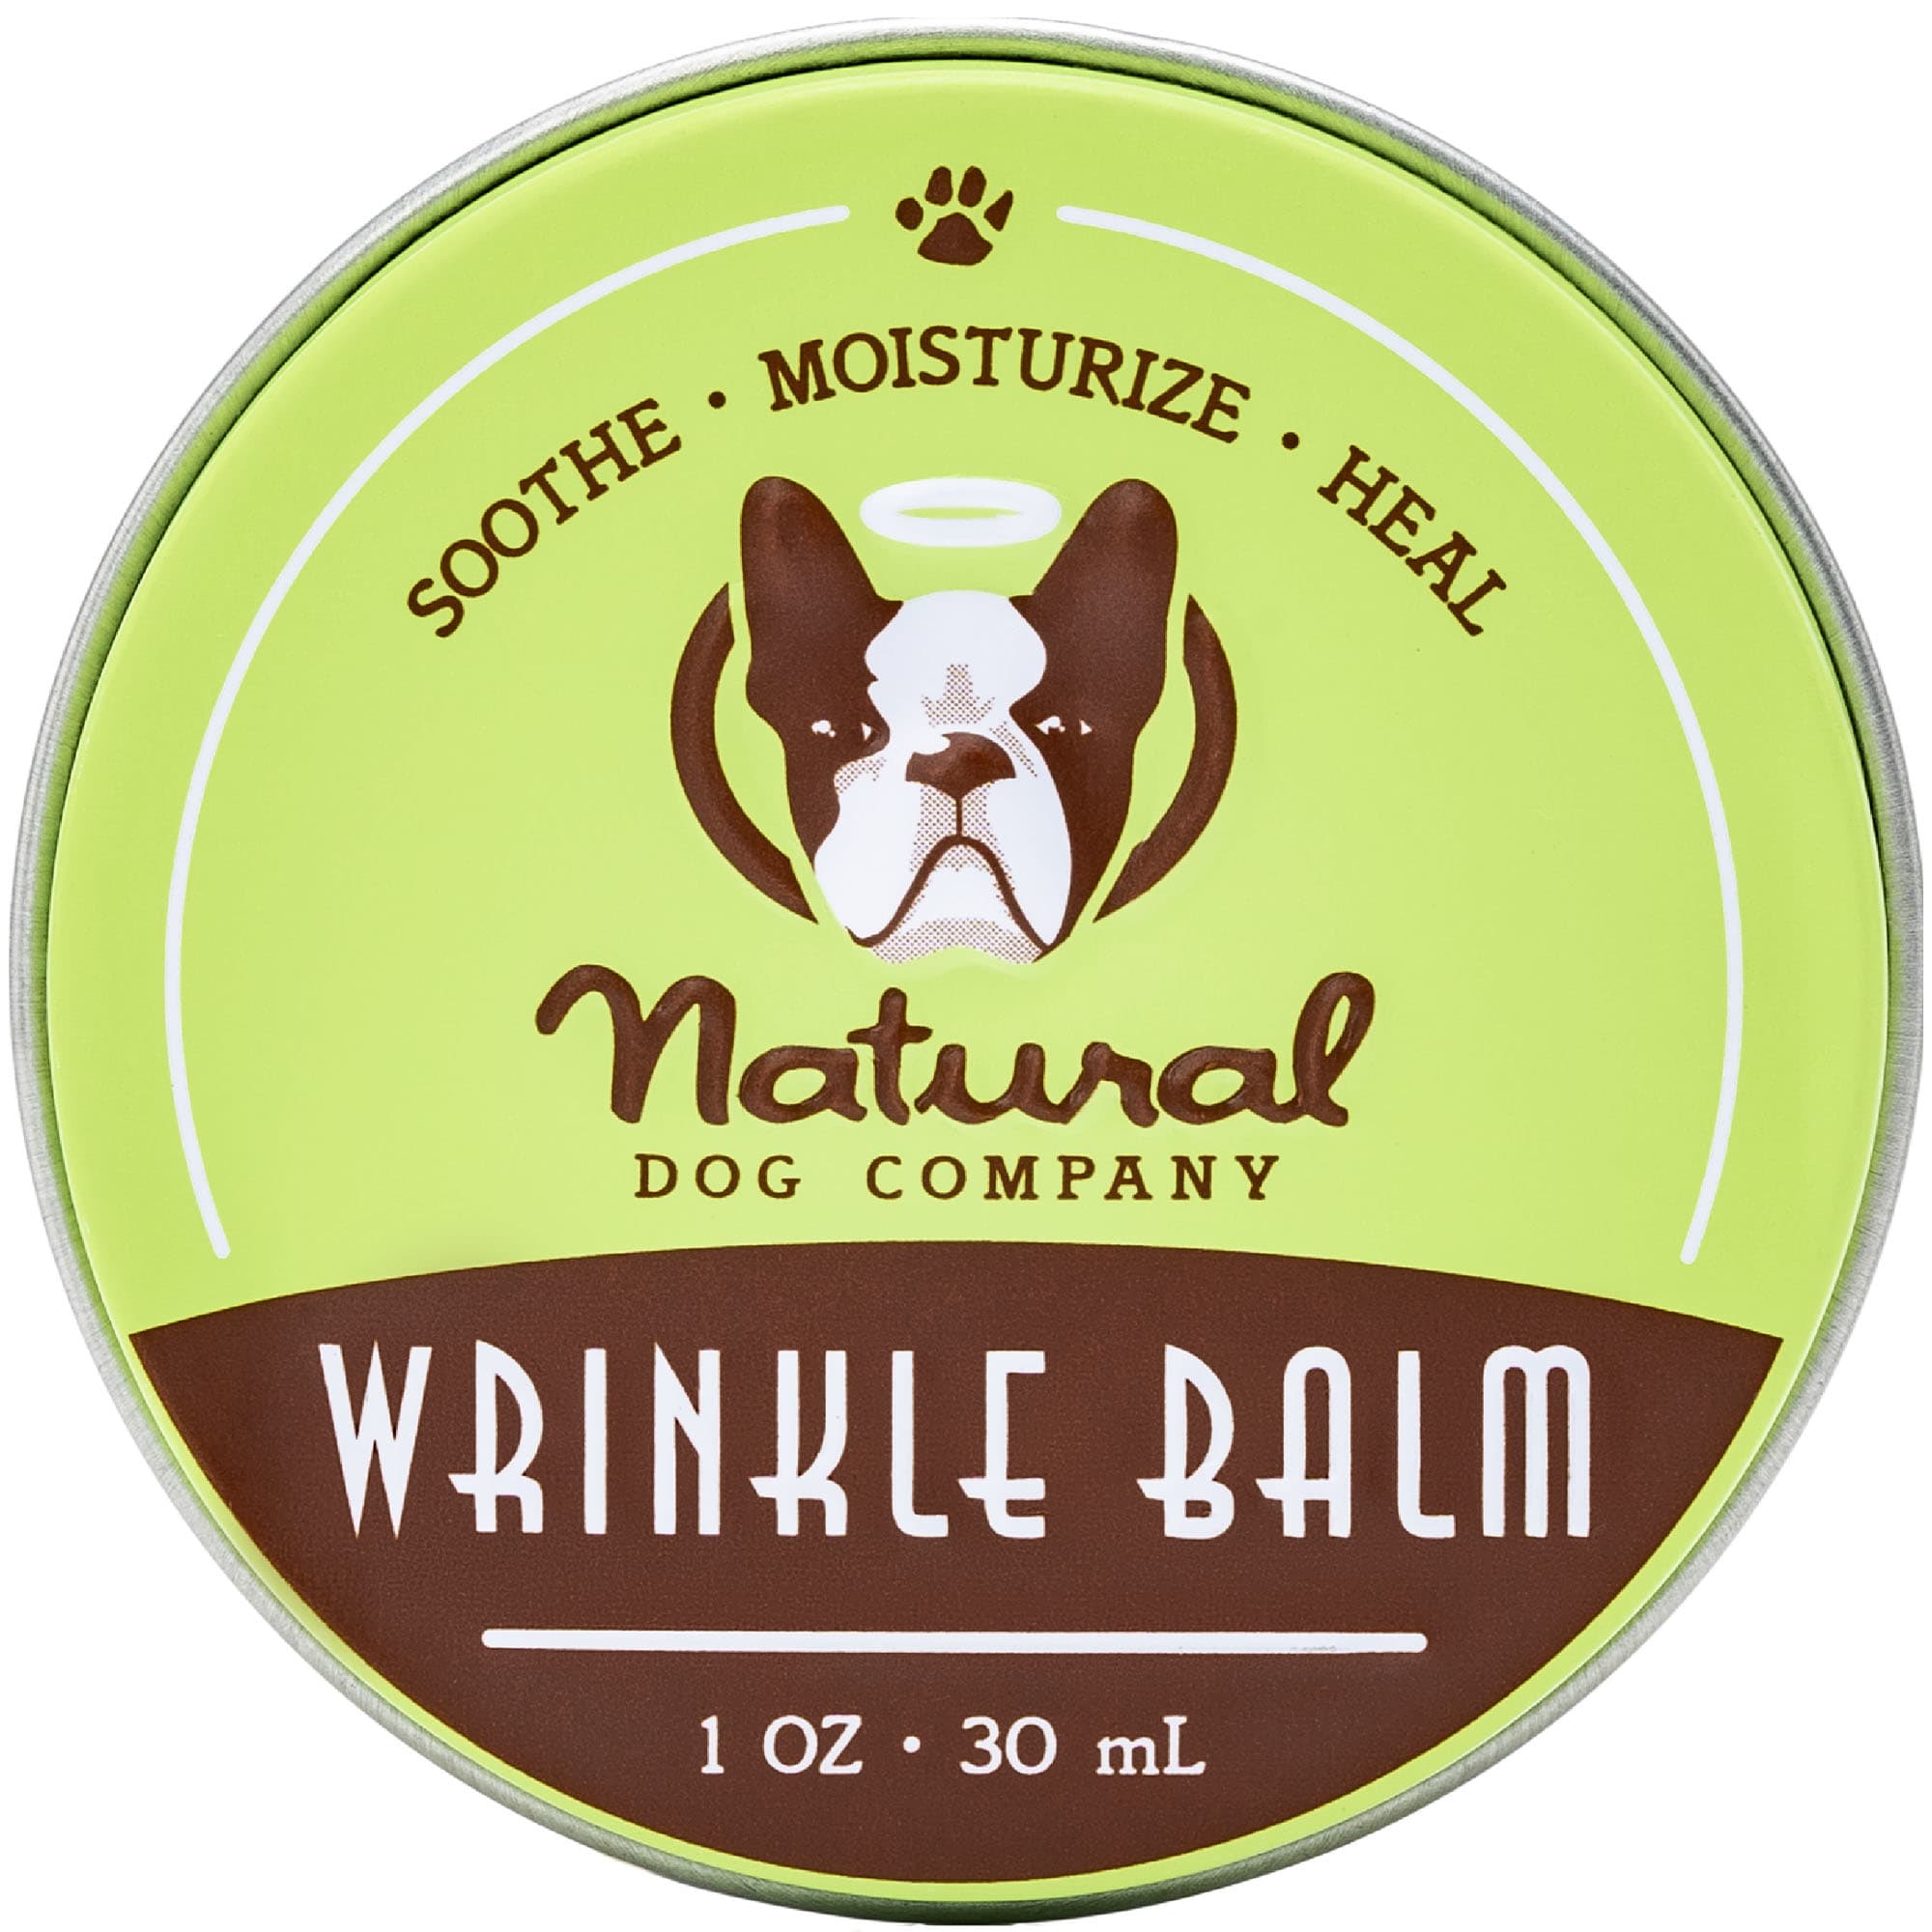 Photos - Dog Medicines & Vitamins Natural Dog Company Wrinkle Balm Tin for Dogs, 1 oz. B 